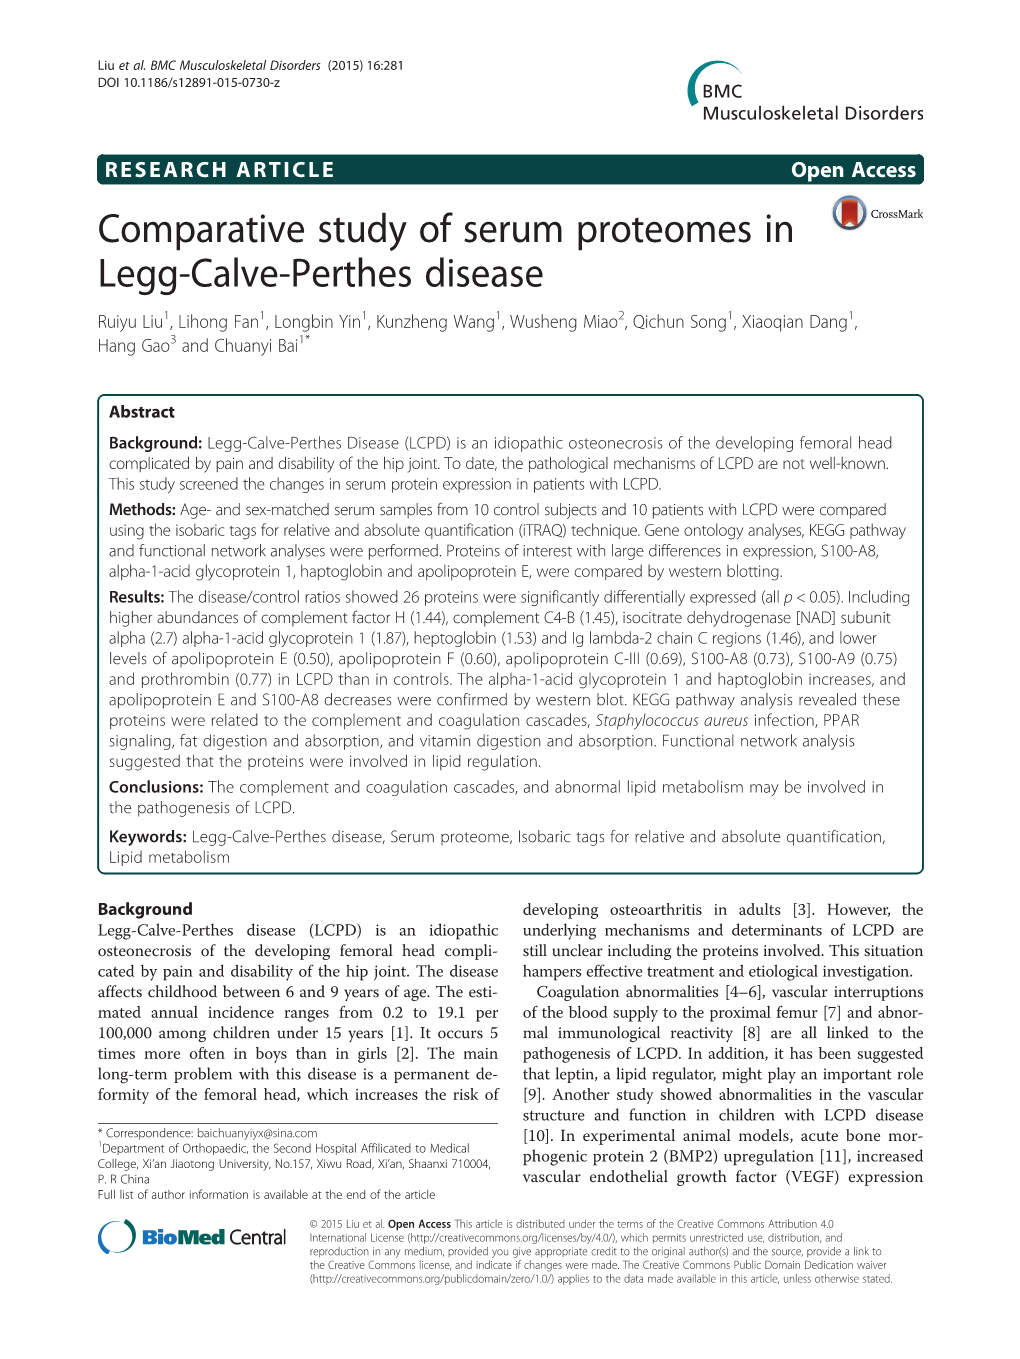 Comparative Study of Serum Proteomes in Legg-Calve-Perthes